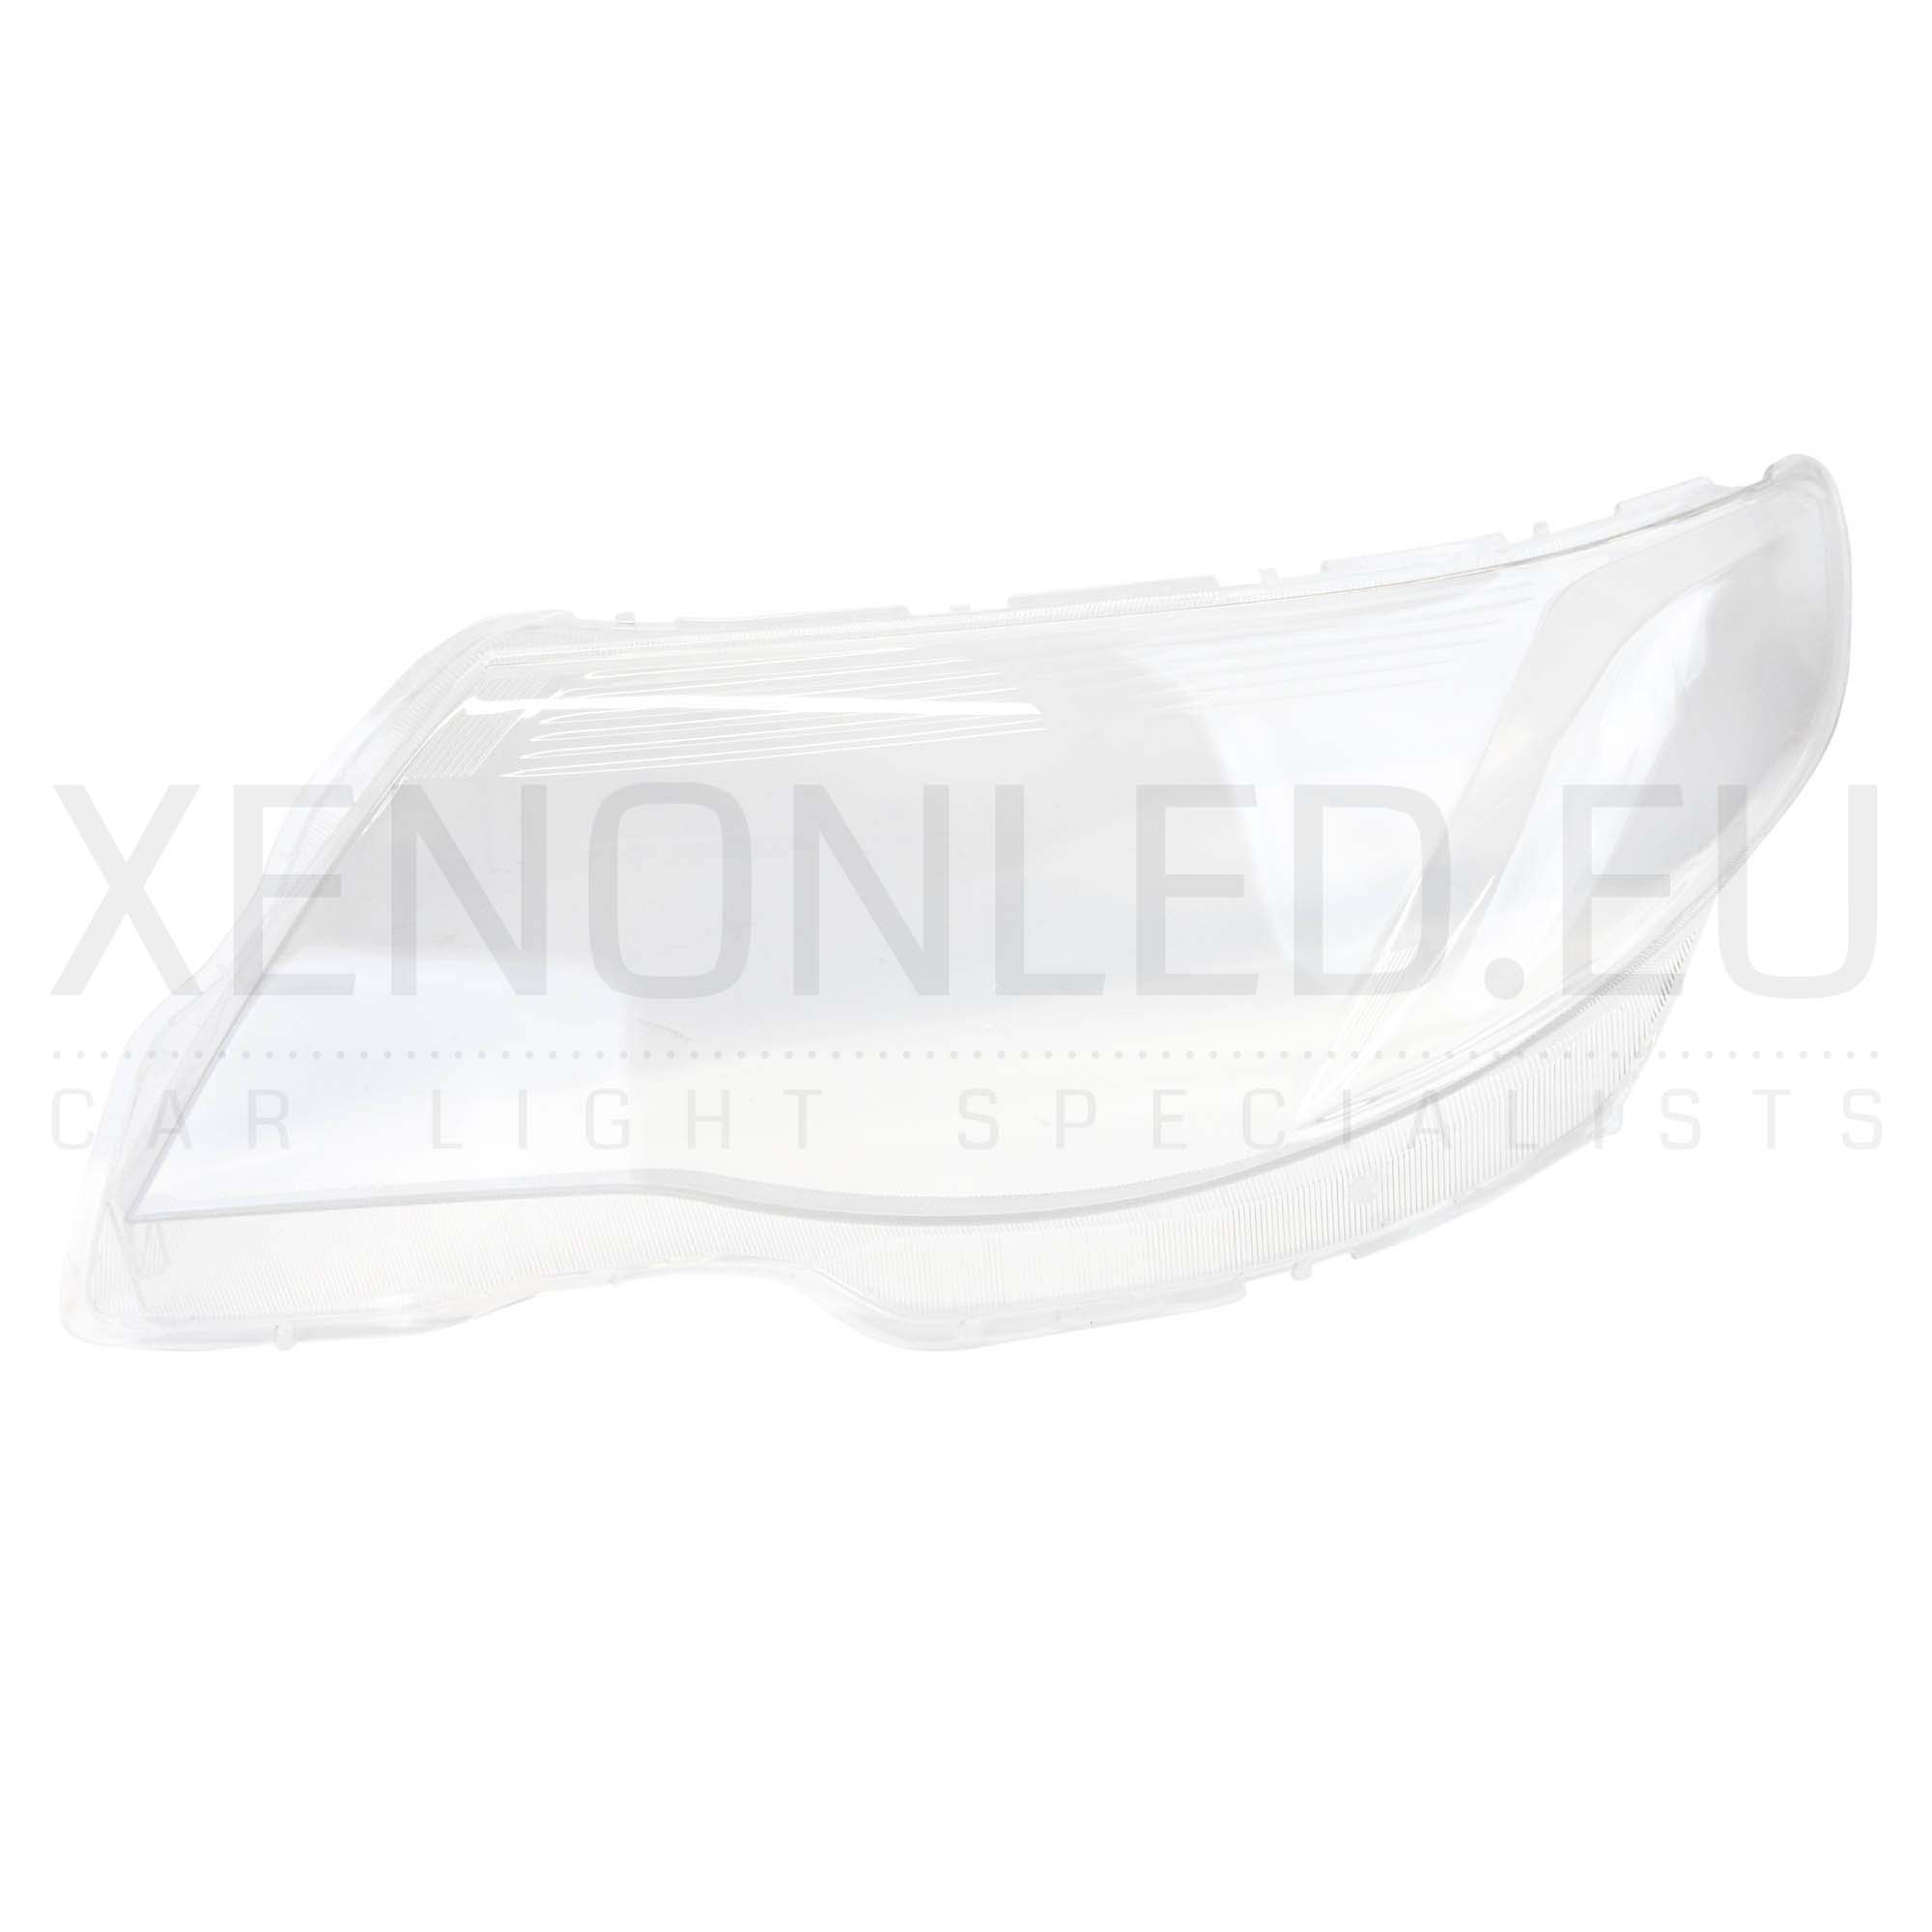 Subaru Forester 2008 - 2013 Headlight Lens Cover Left Side